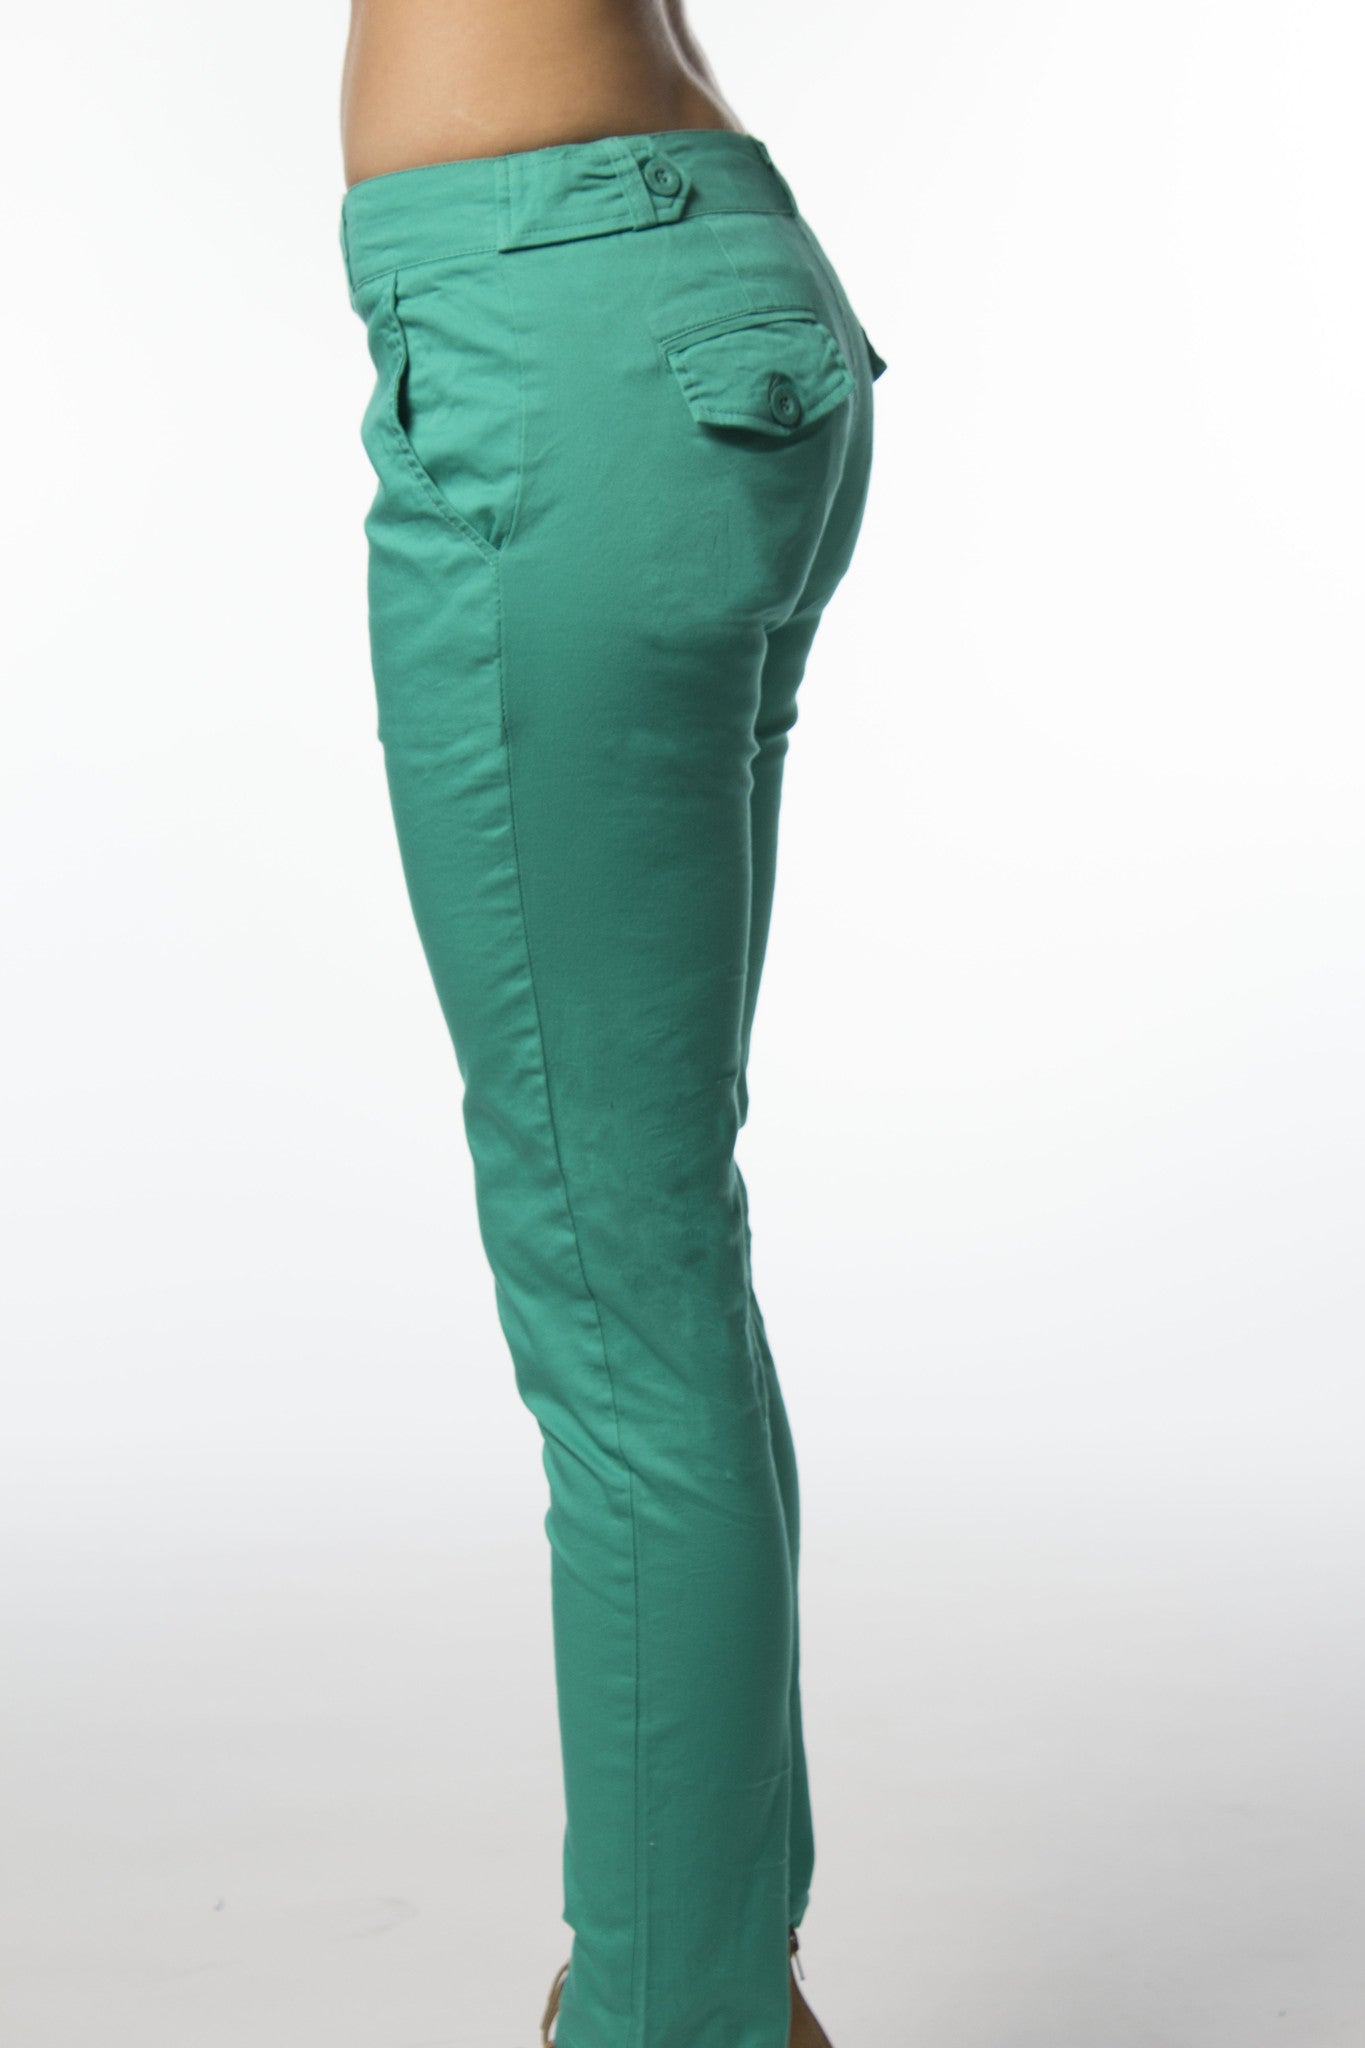 grabber green cotton skinny pant